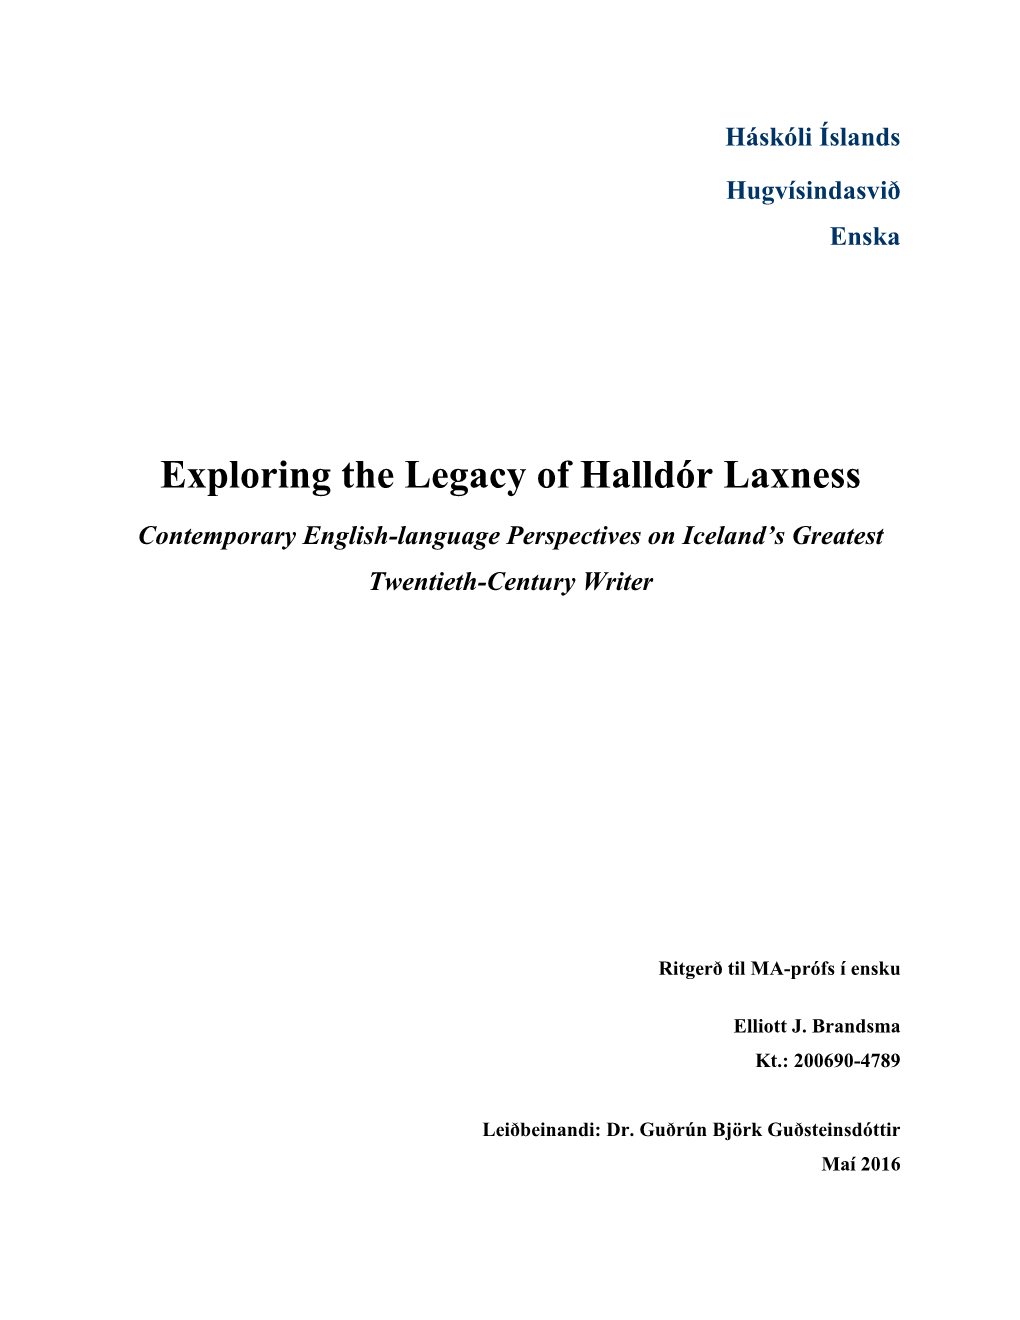 Exploring the Legacy of Halldór Laxness